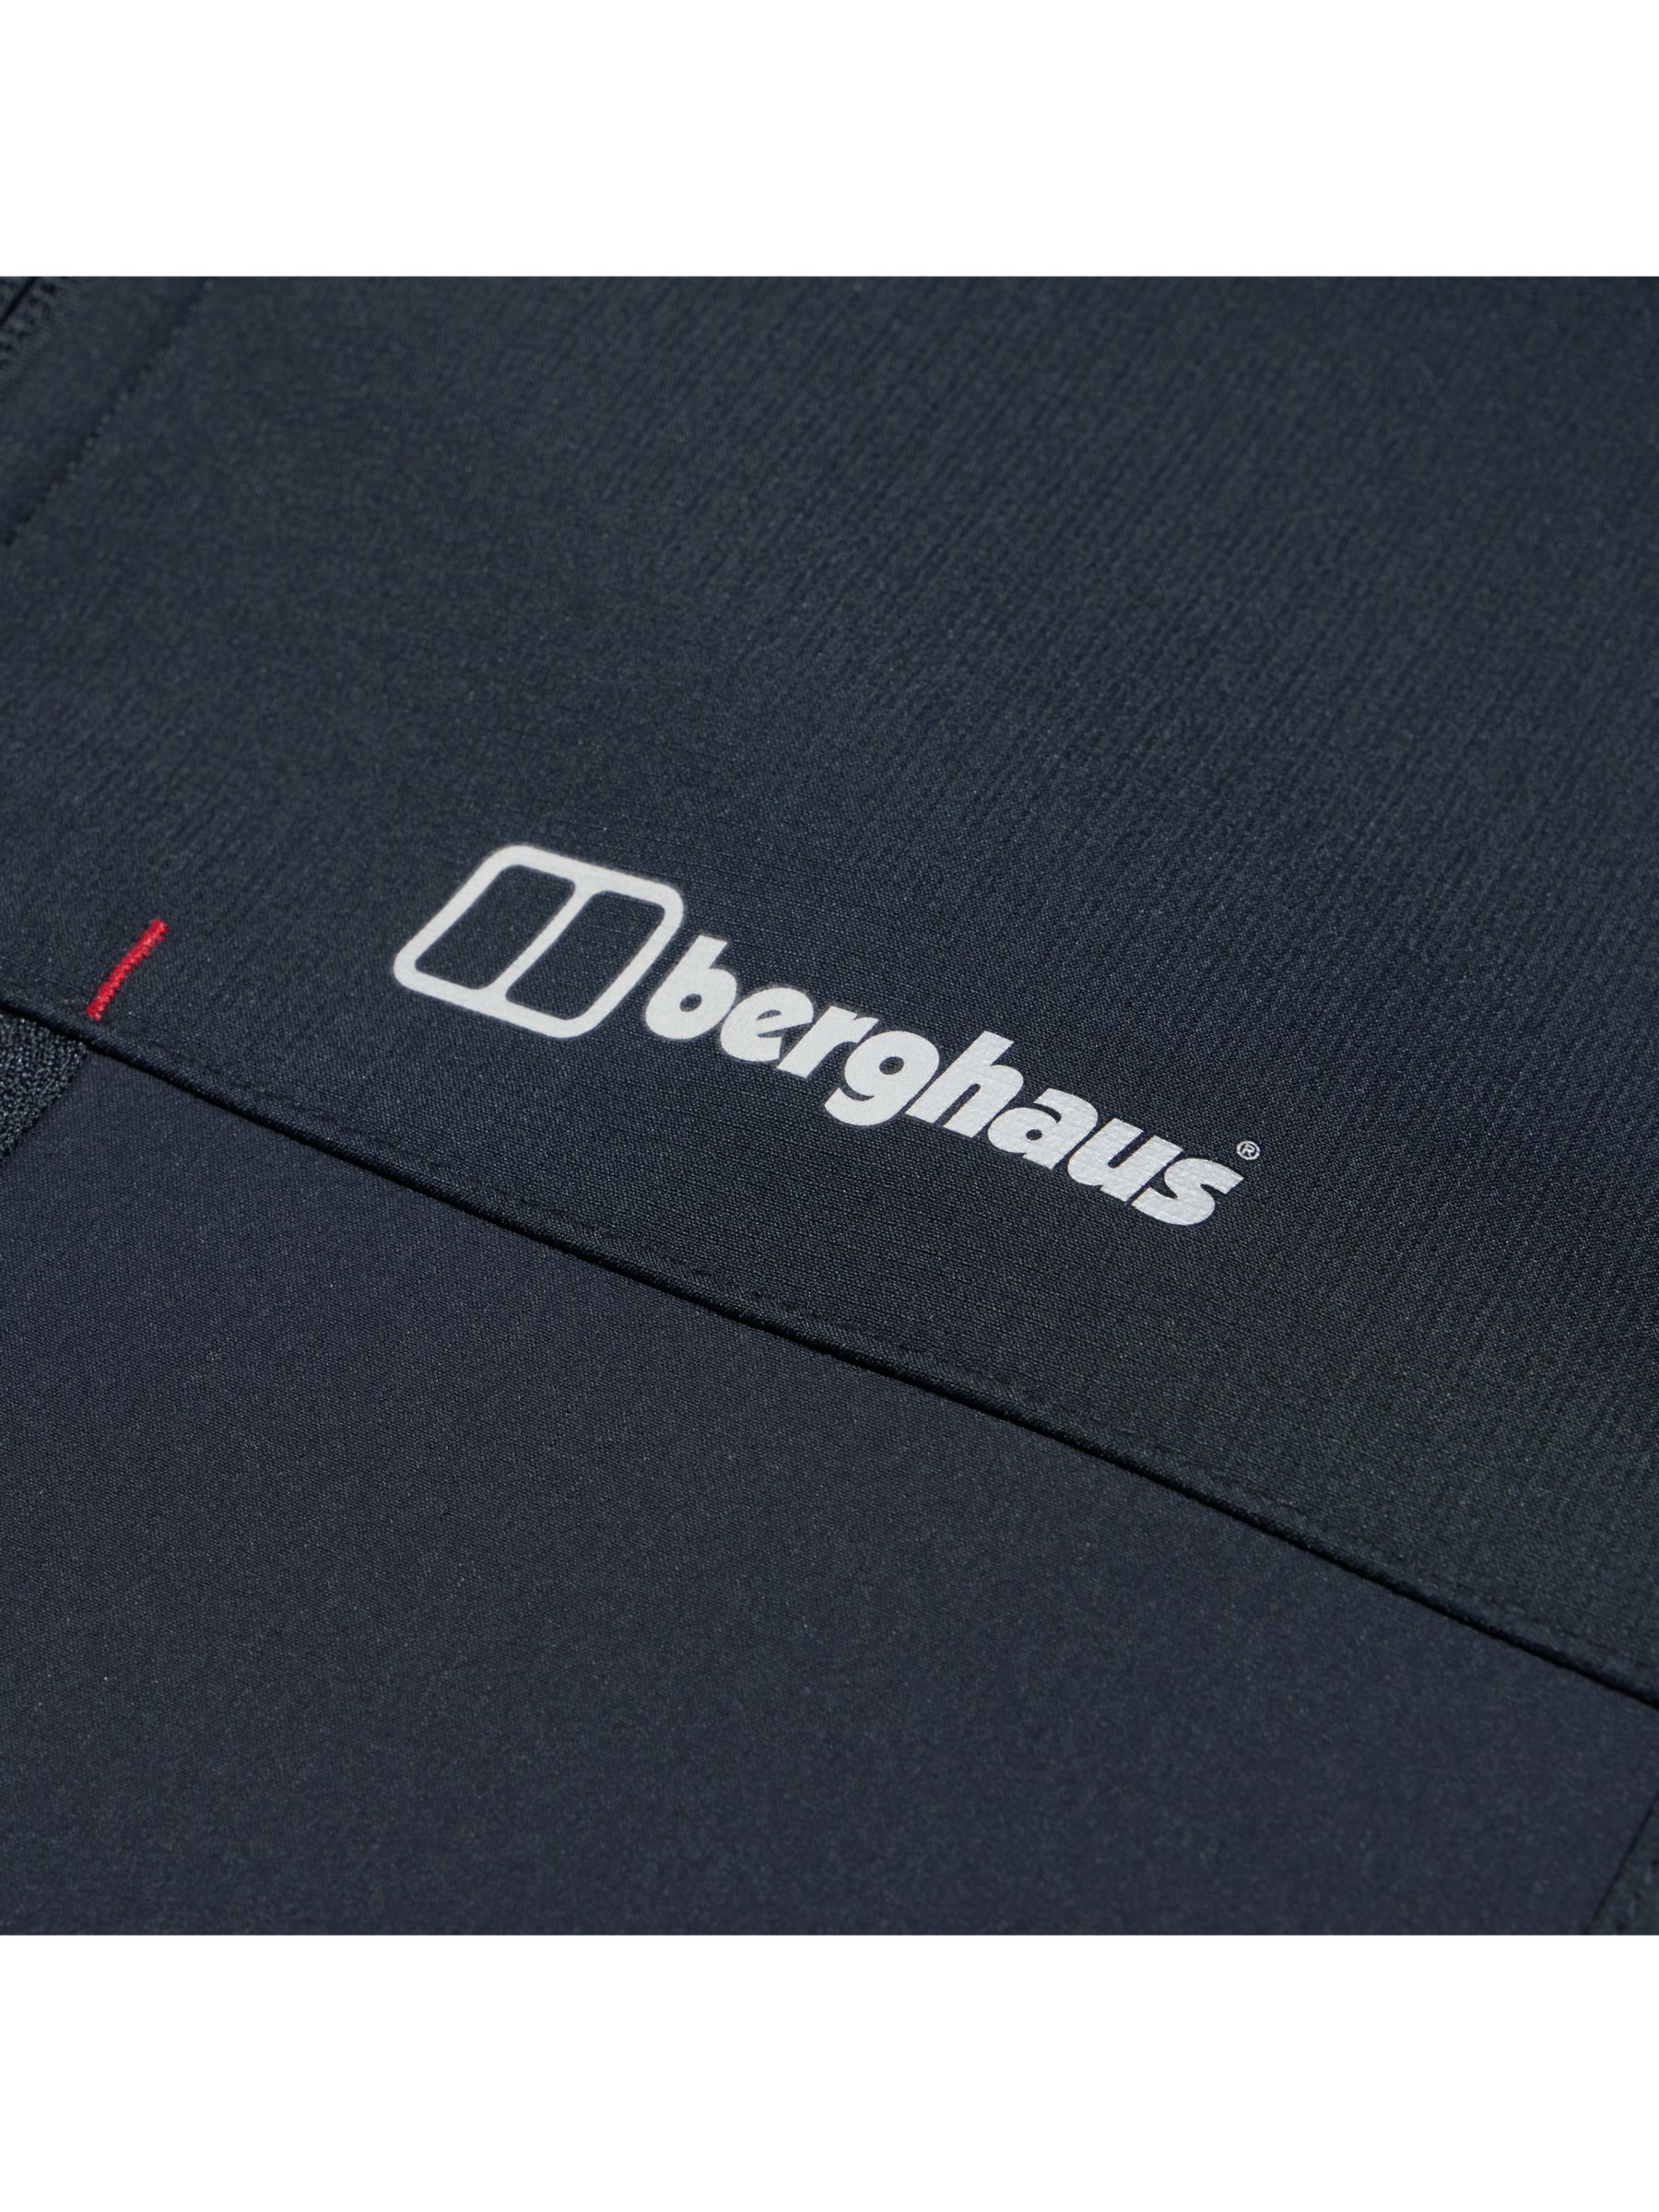 Berghaus Ghlas 2.0 Men's Softshell Jacket, Jet Black, XL